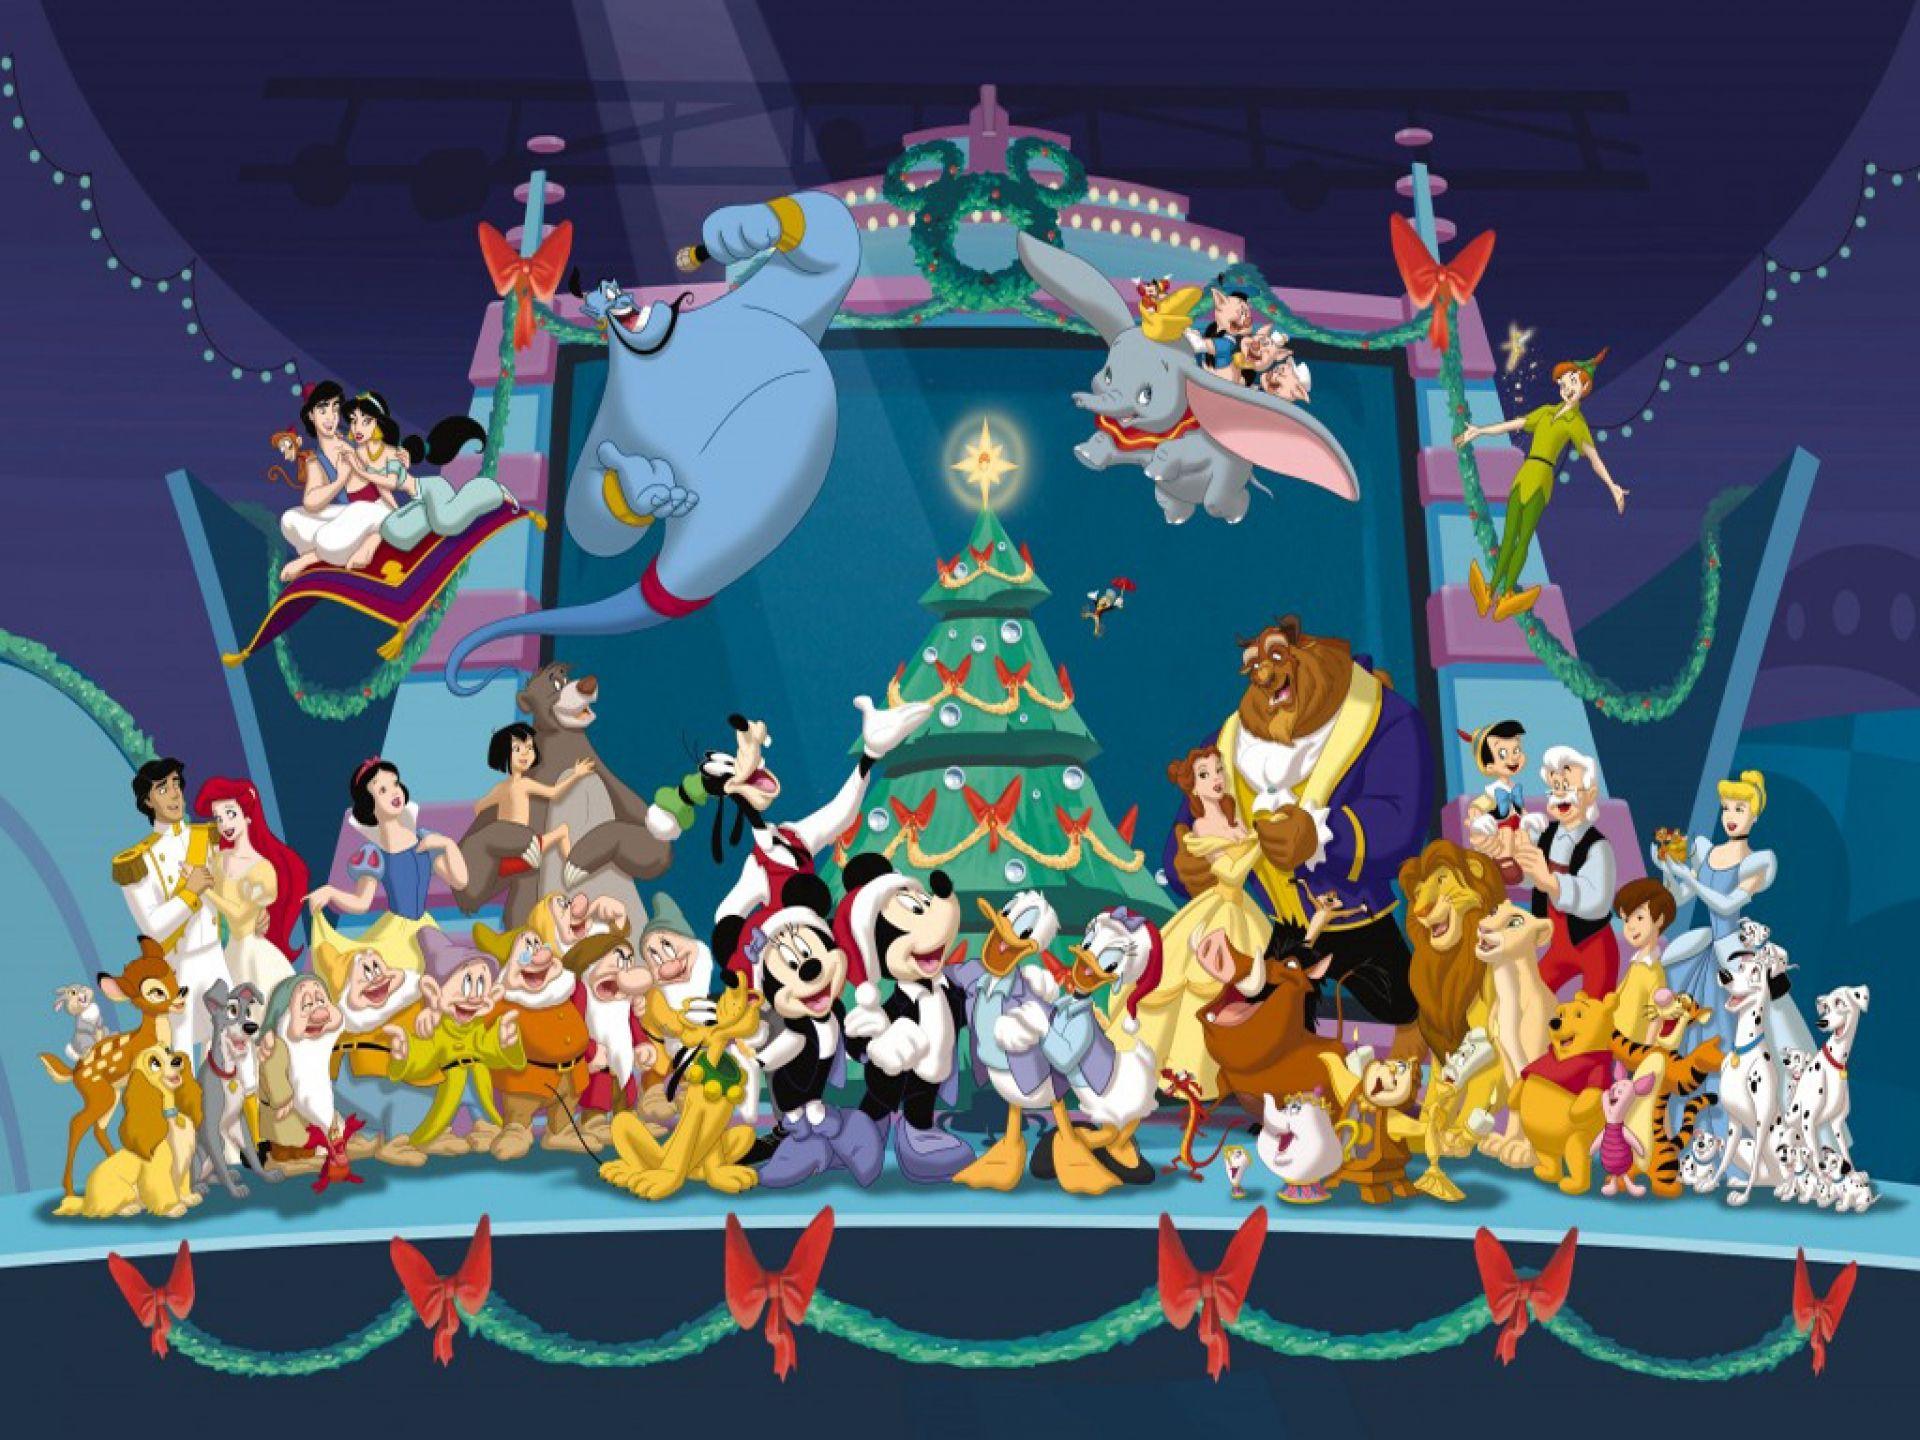 Disney Characters Wallpaper 51 images